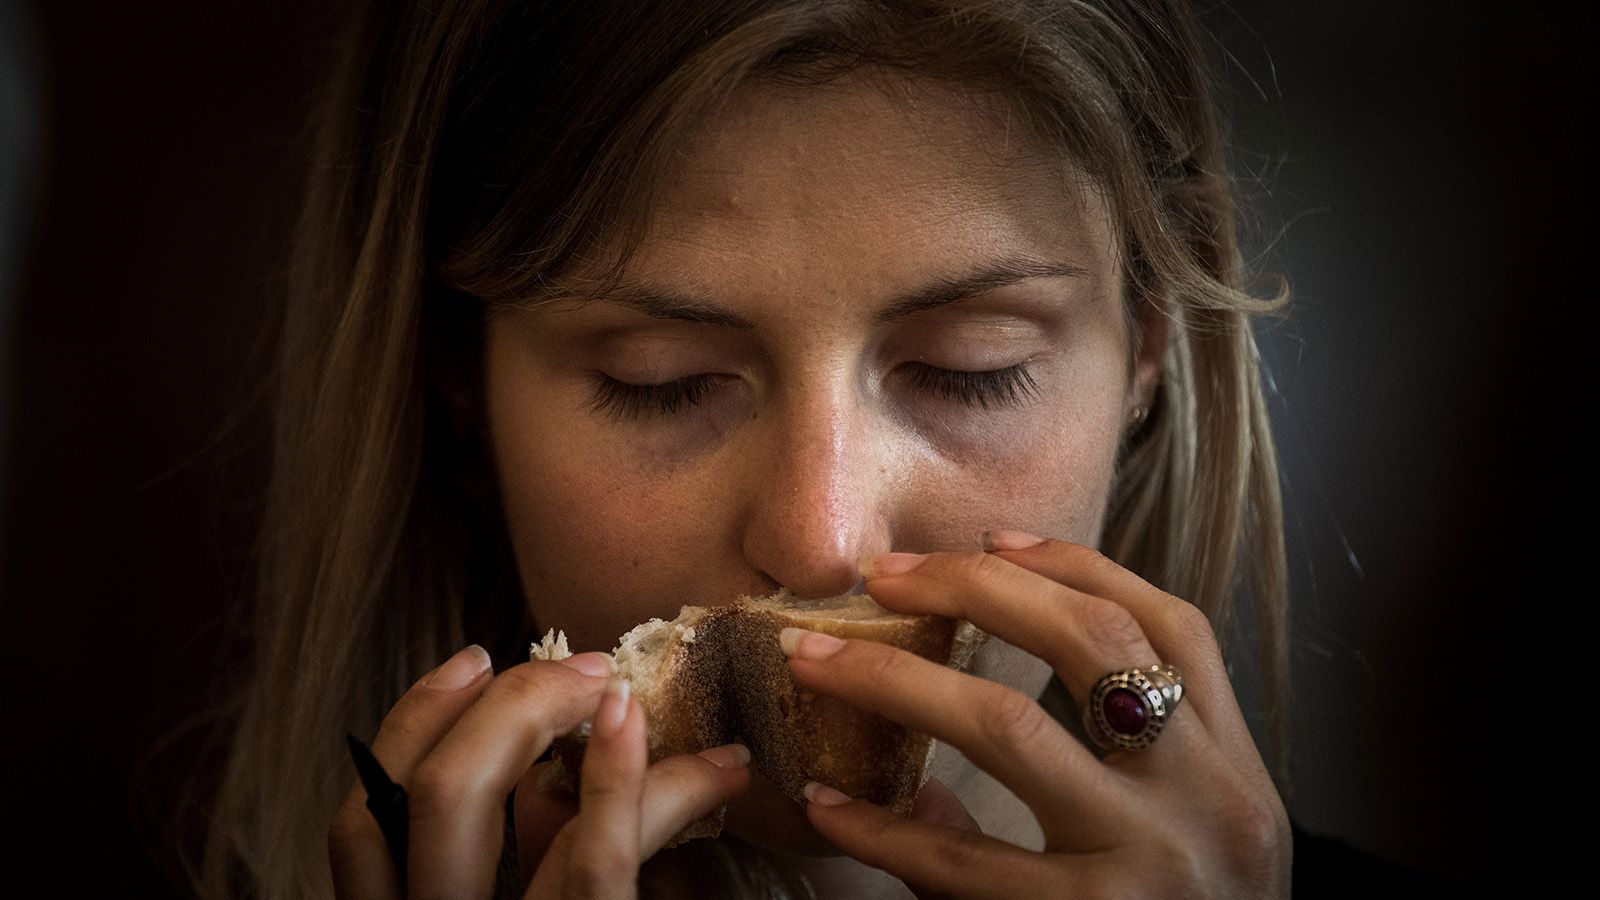 La baguette: secrets of France's most addictive food